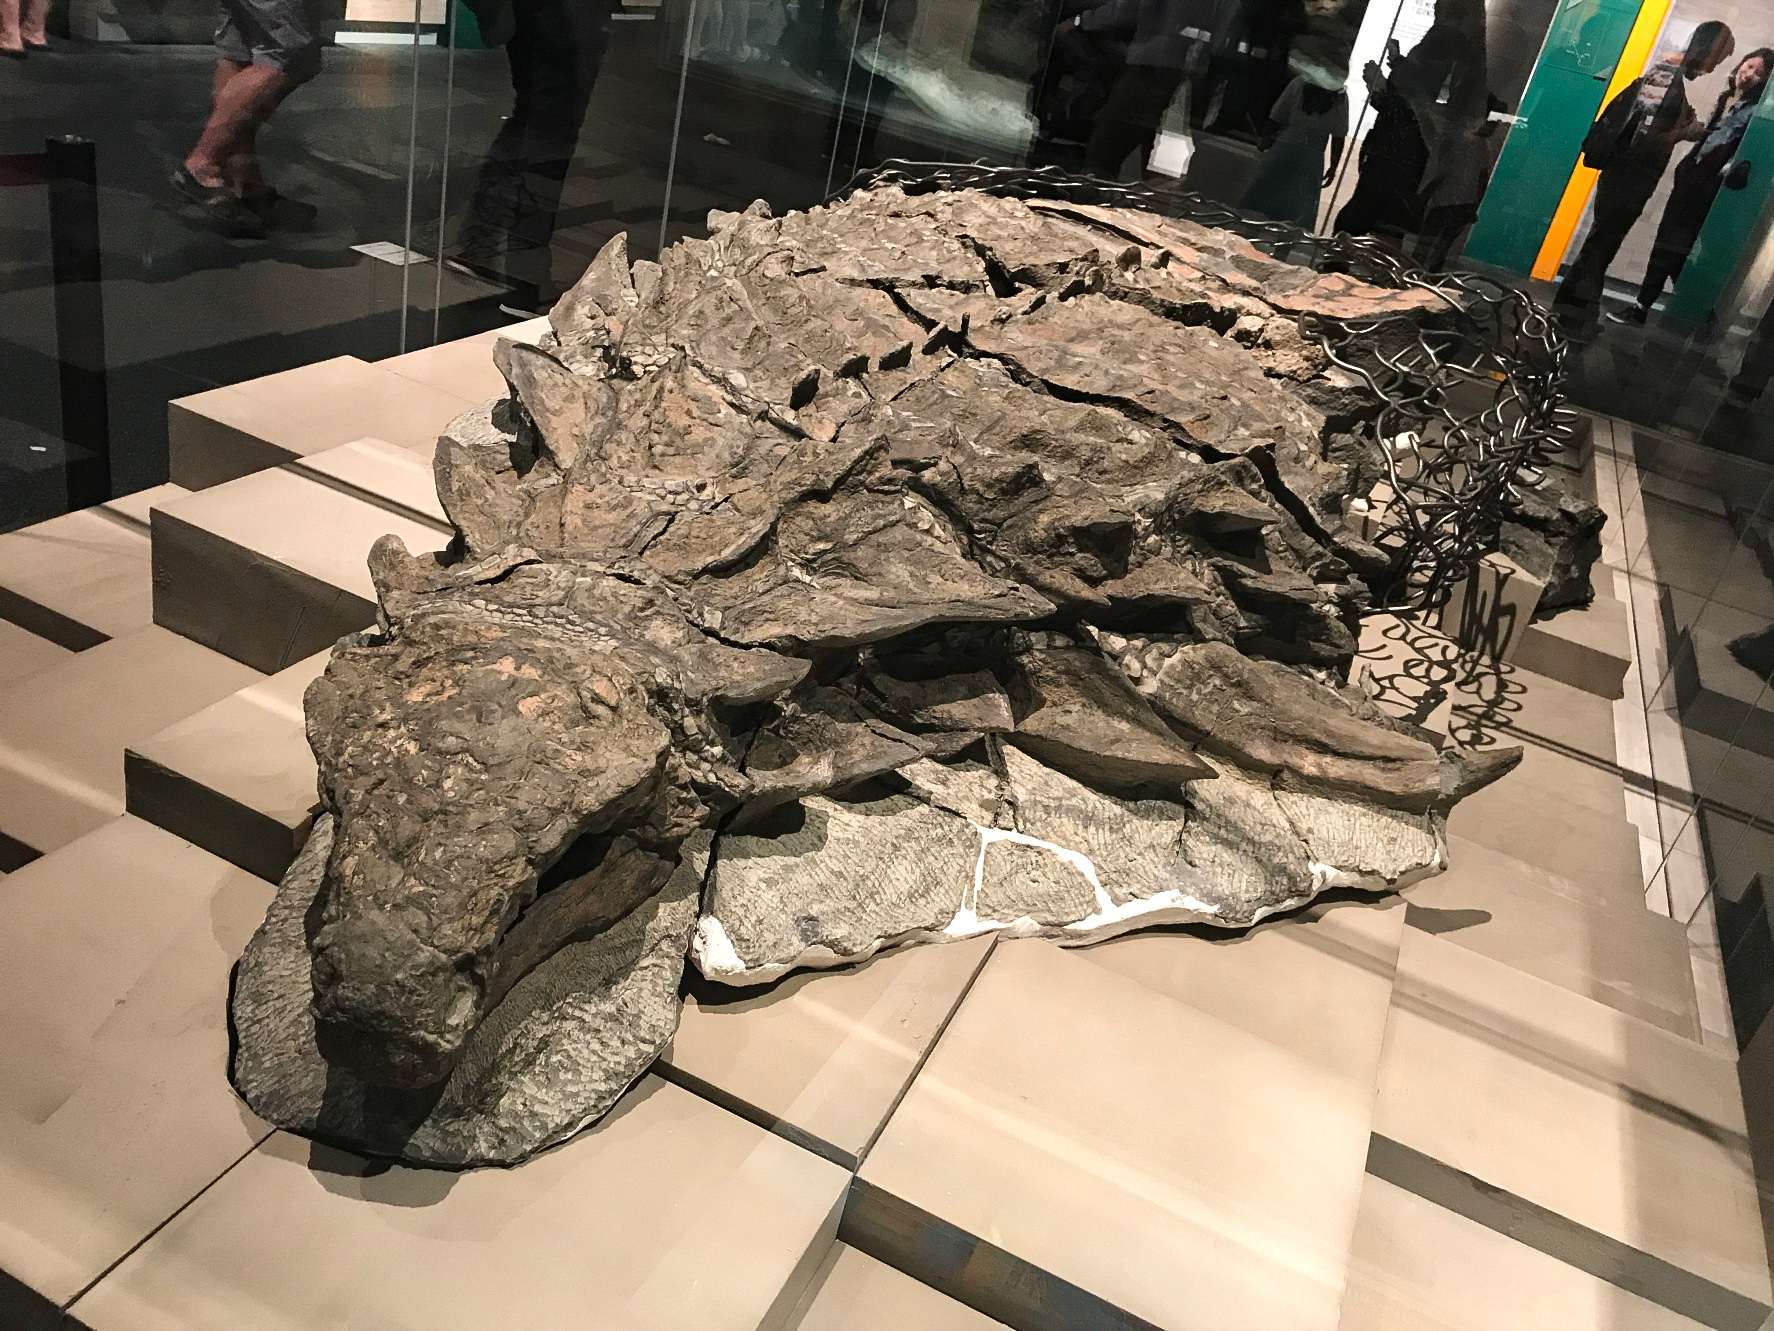 Borealopelta（意为“北方盾牌”）是加拿大阿尔伯塔省早白垩世的结节龙科甲龙属。 它包含一个物种，B. markmitchelli，由 Caleb Brown 及其同事于 2017 年从保存完好的 Suncor 结节龙标本中命名。